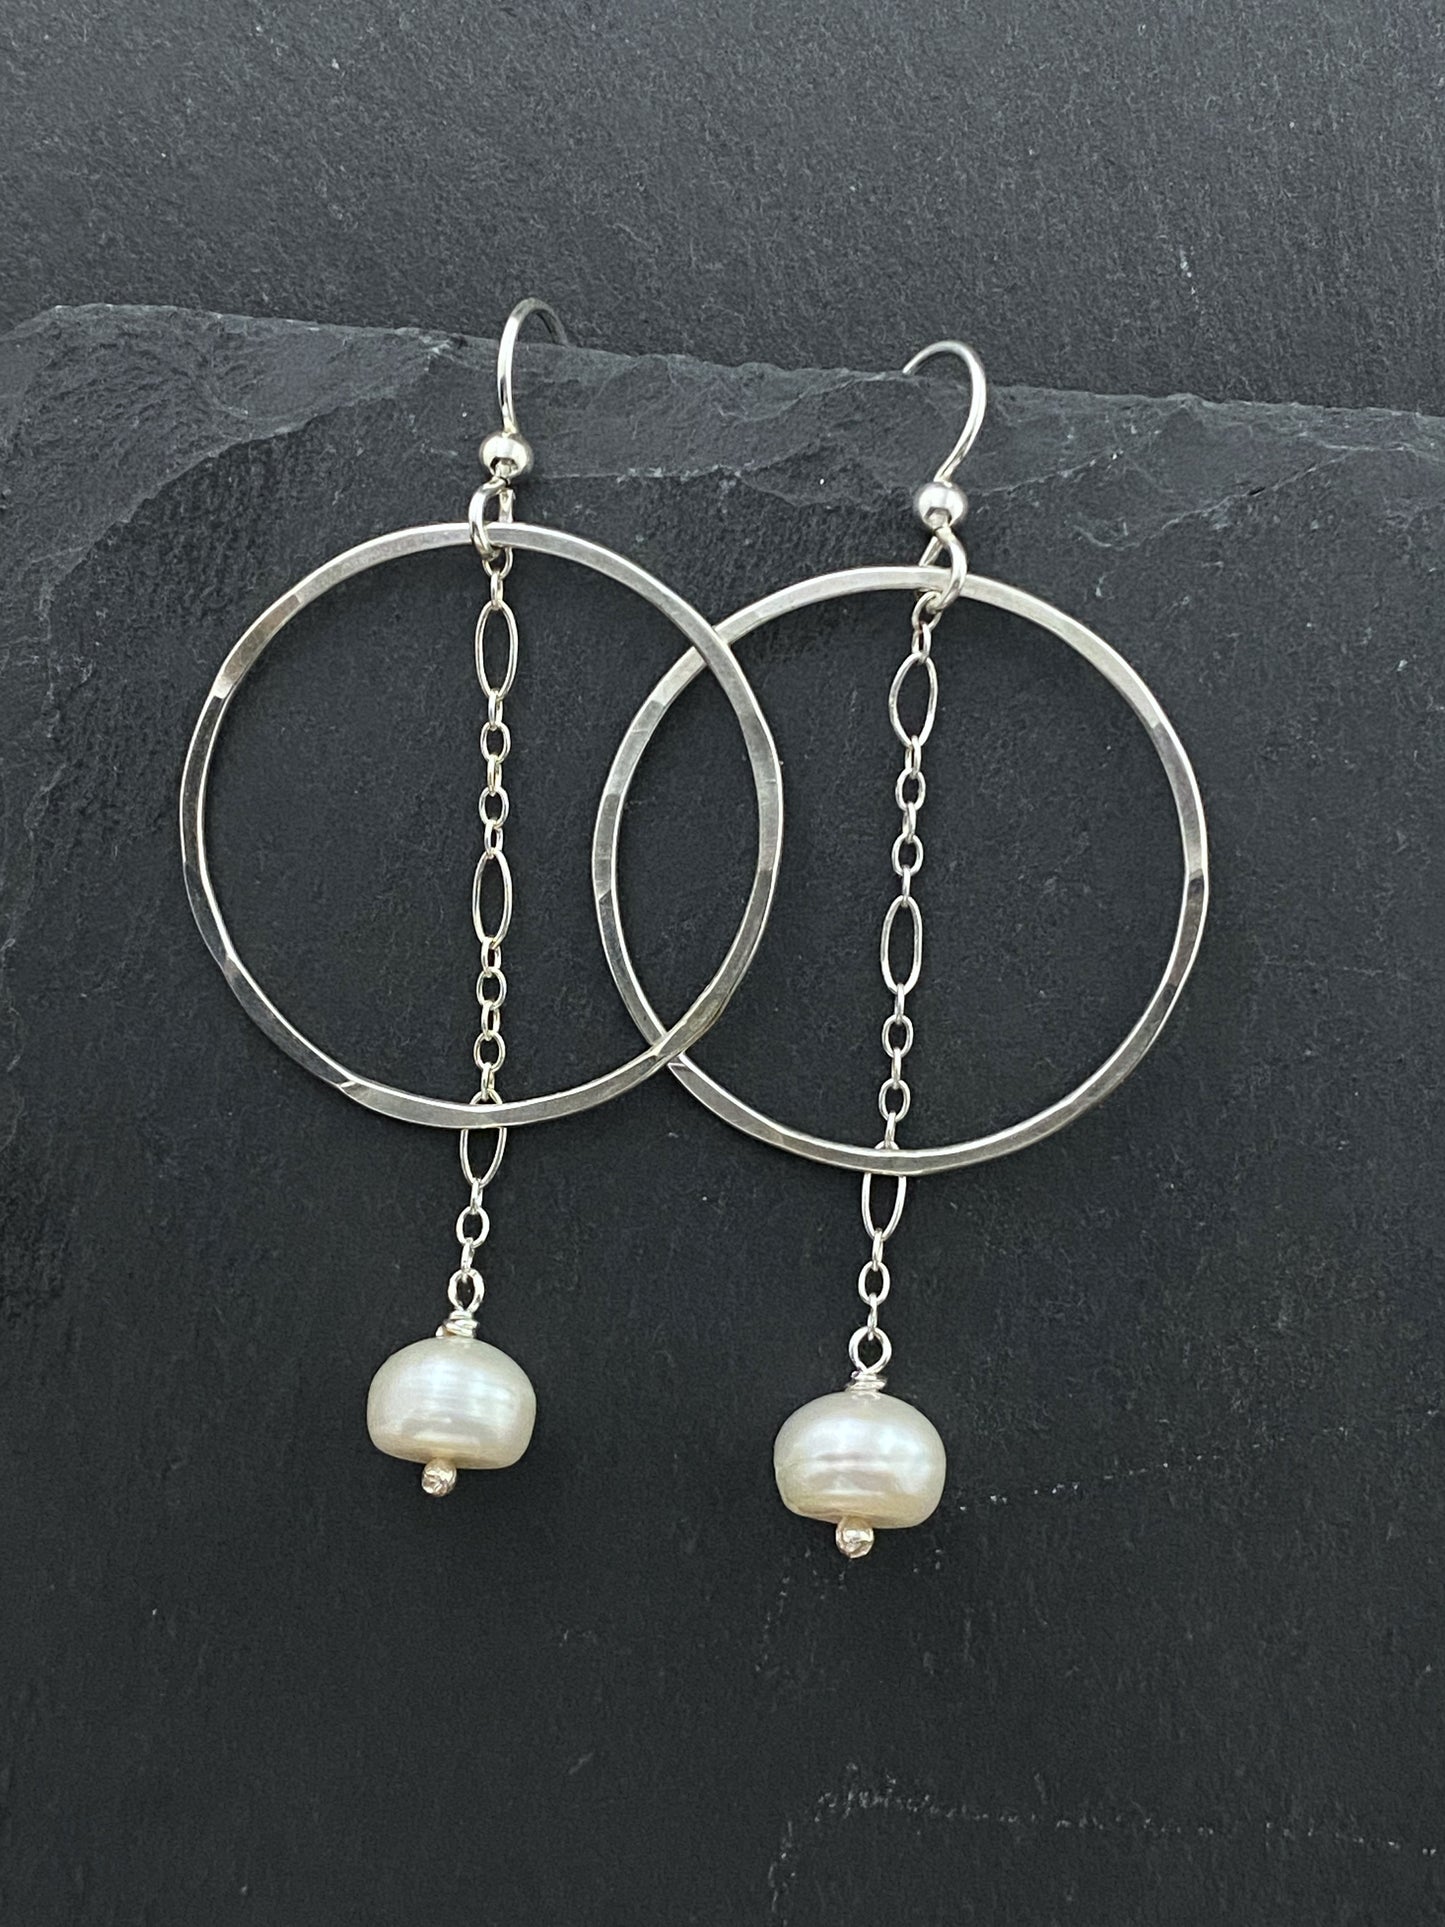 Sterling silver forged hoop earrings with pearls